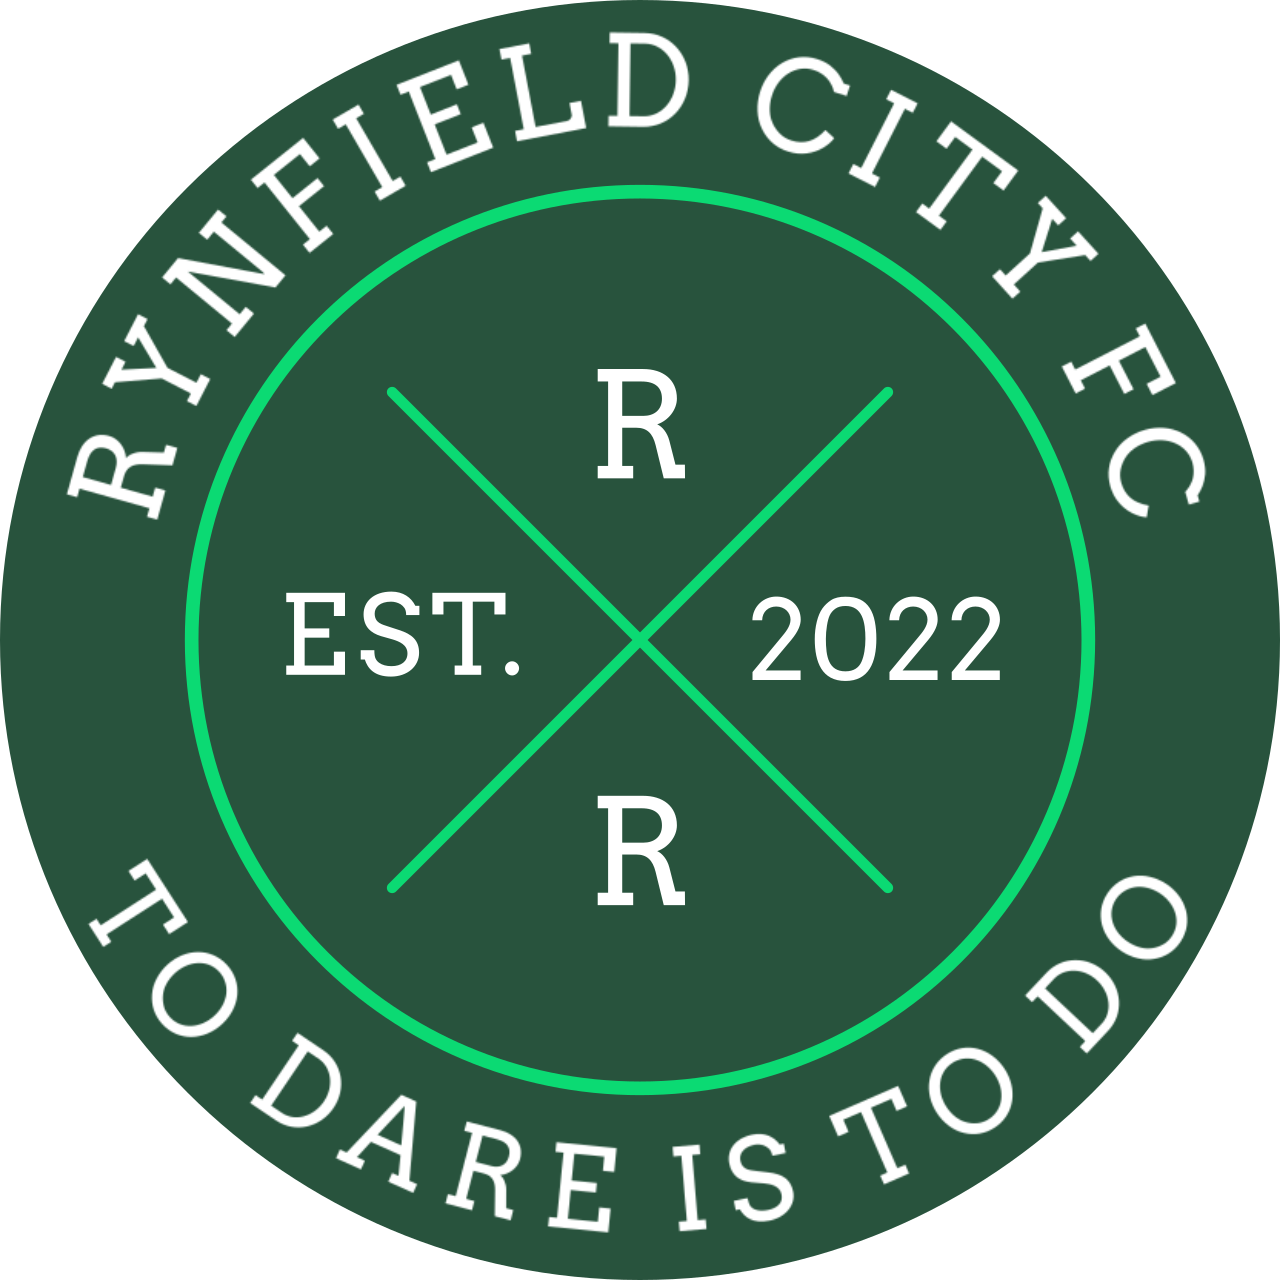 RYNFIELD CITY FC's logo